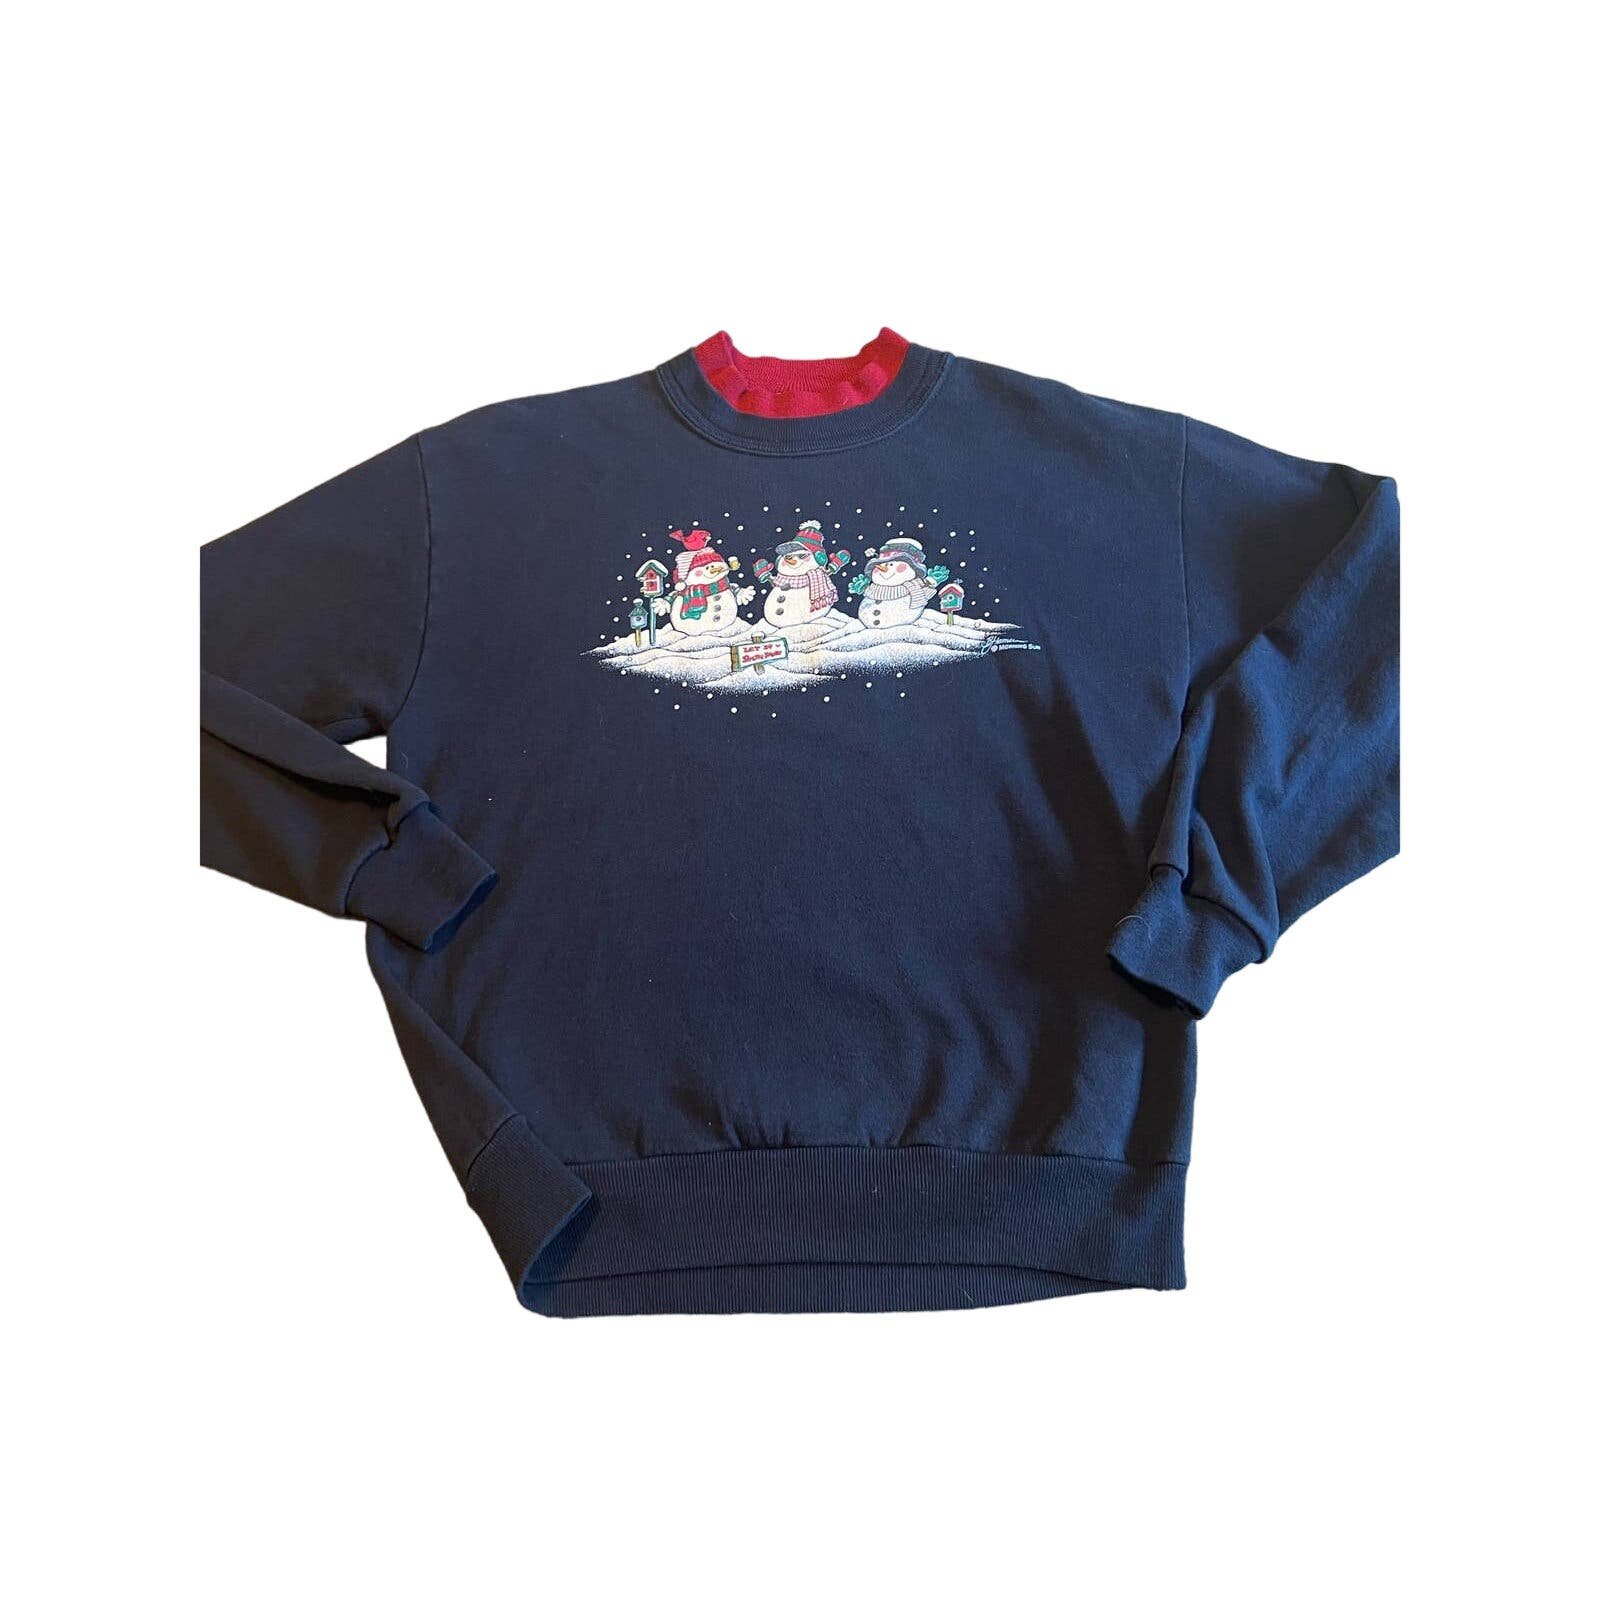 Amazing Vintage 90s Holiday Christmas Sweater - Snowmen